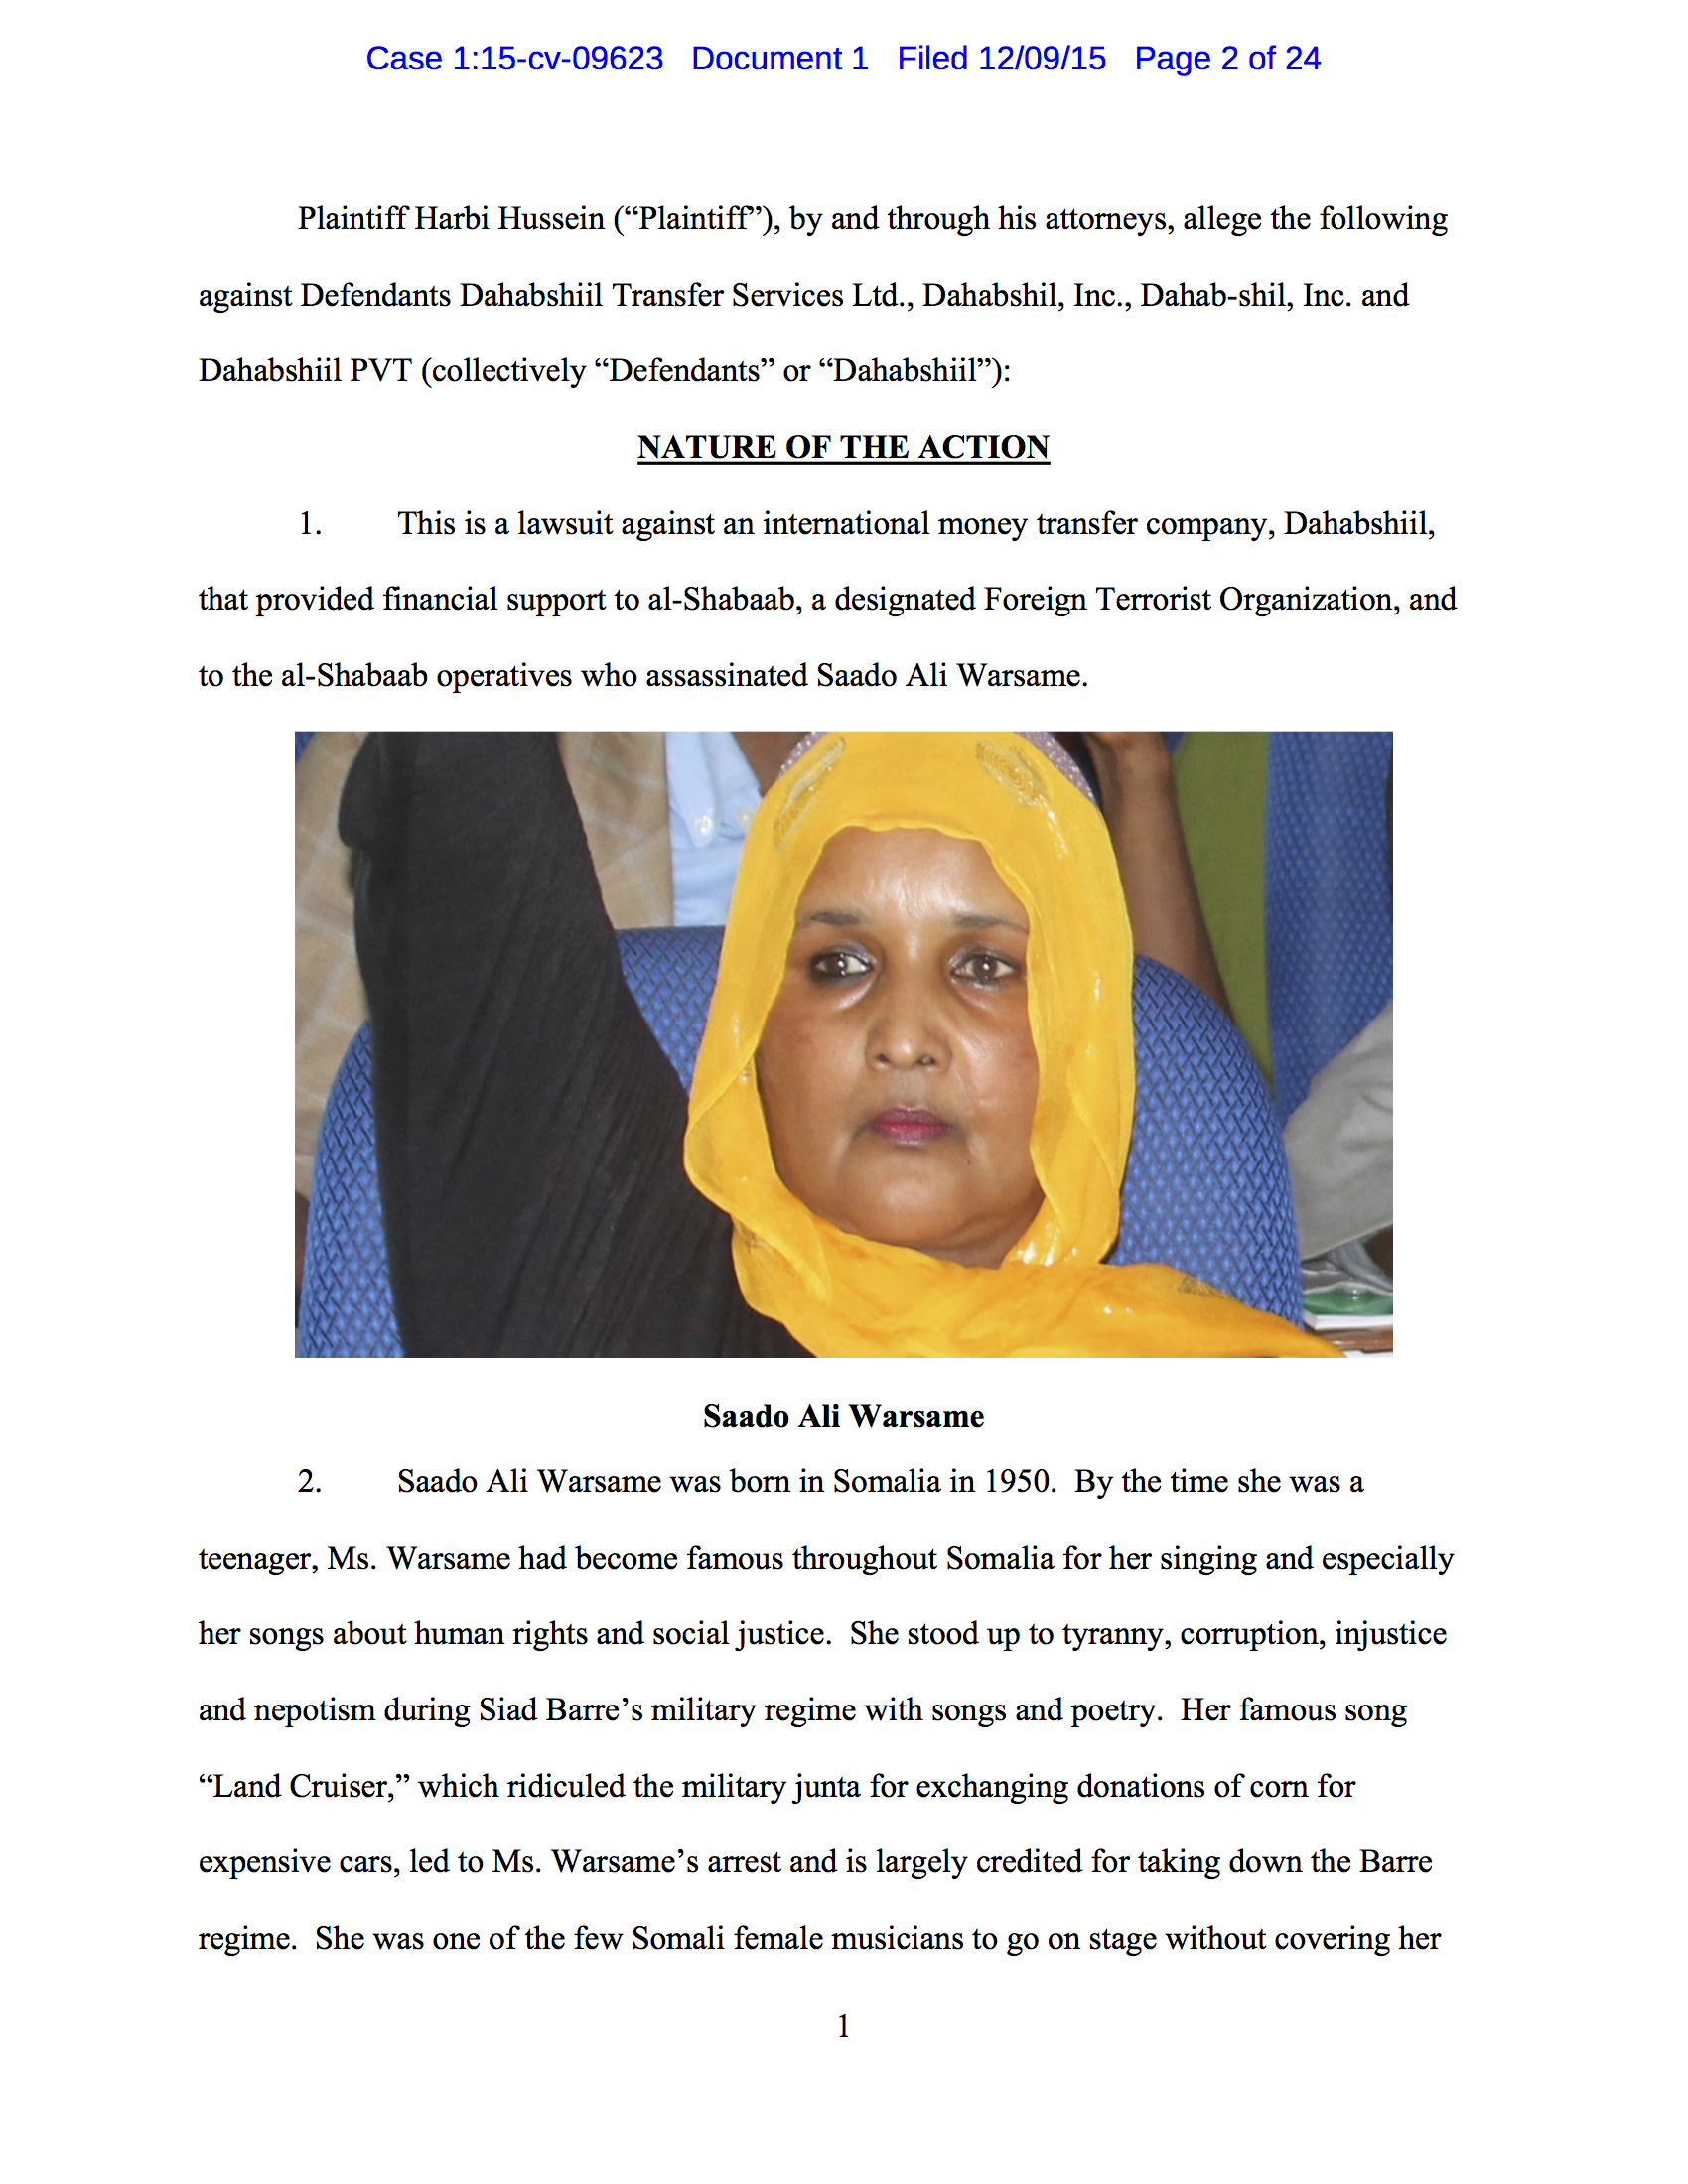 Slain Somali Icon's Son Targets Terror Funds Dahabshiil.